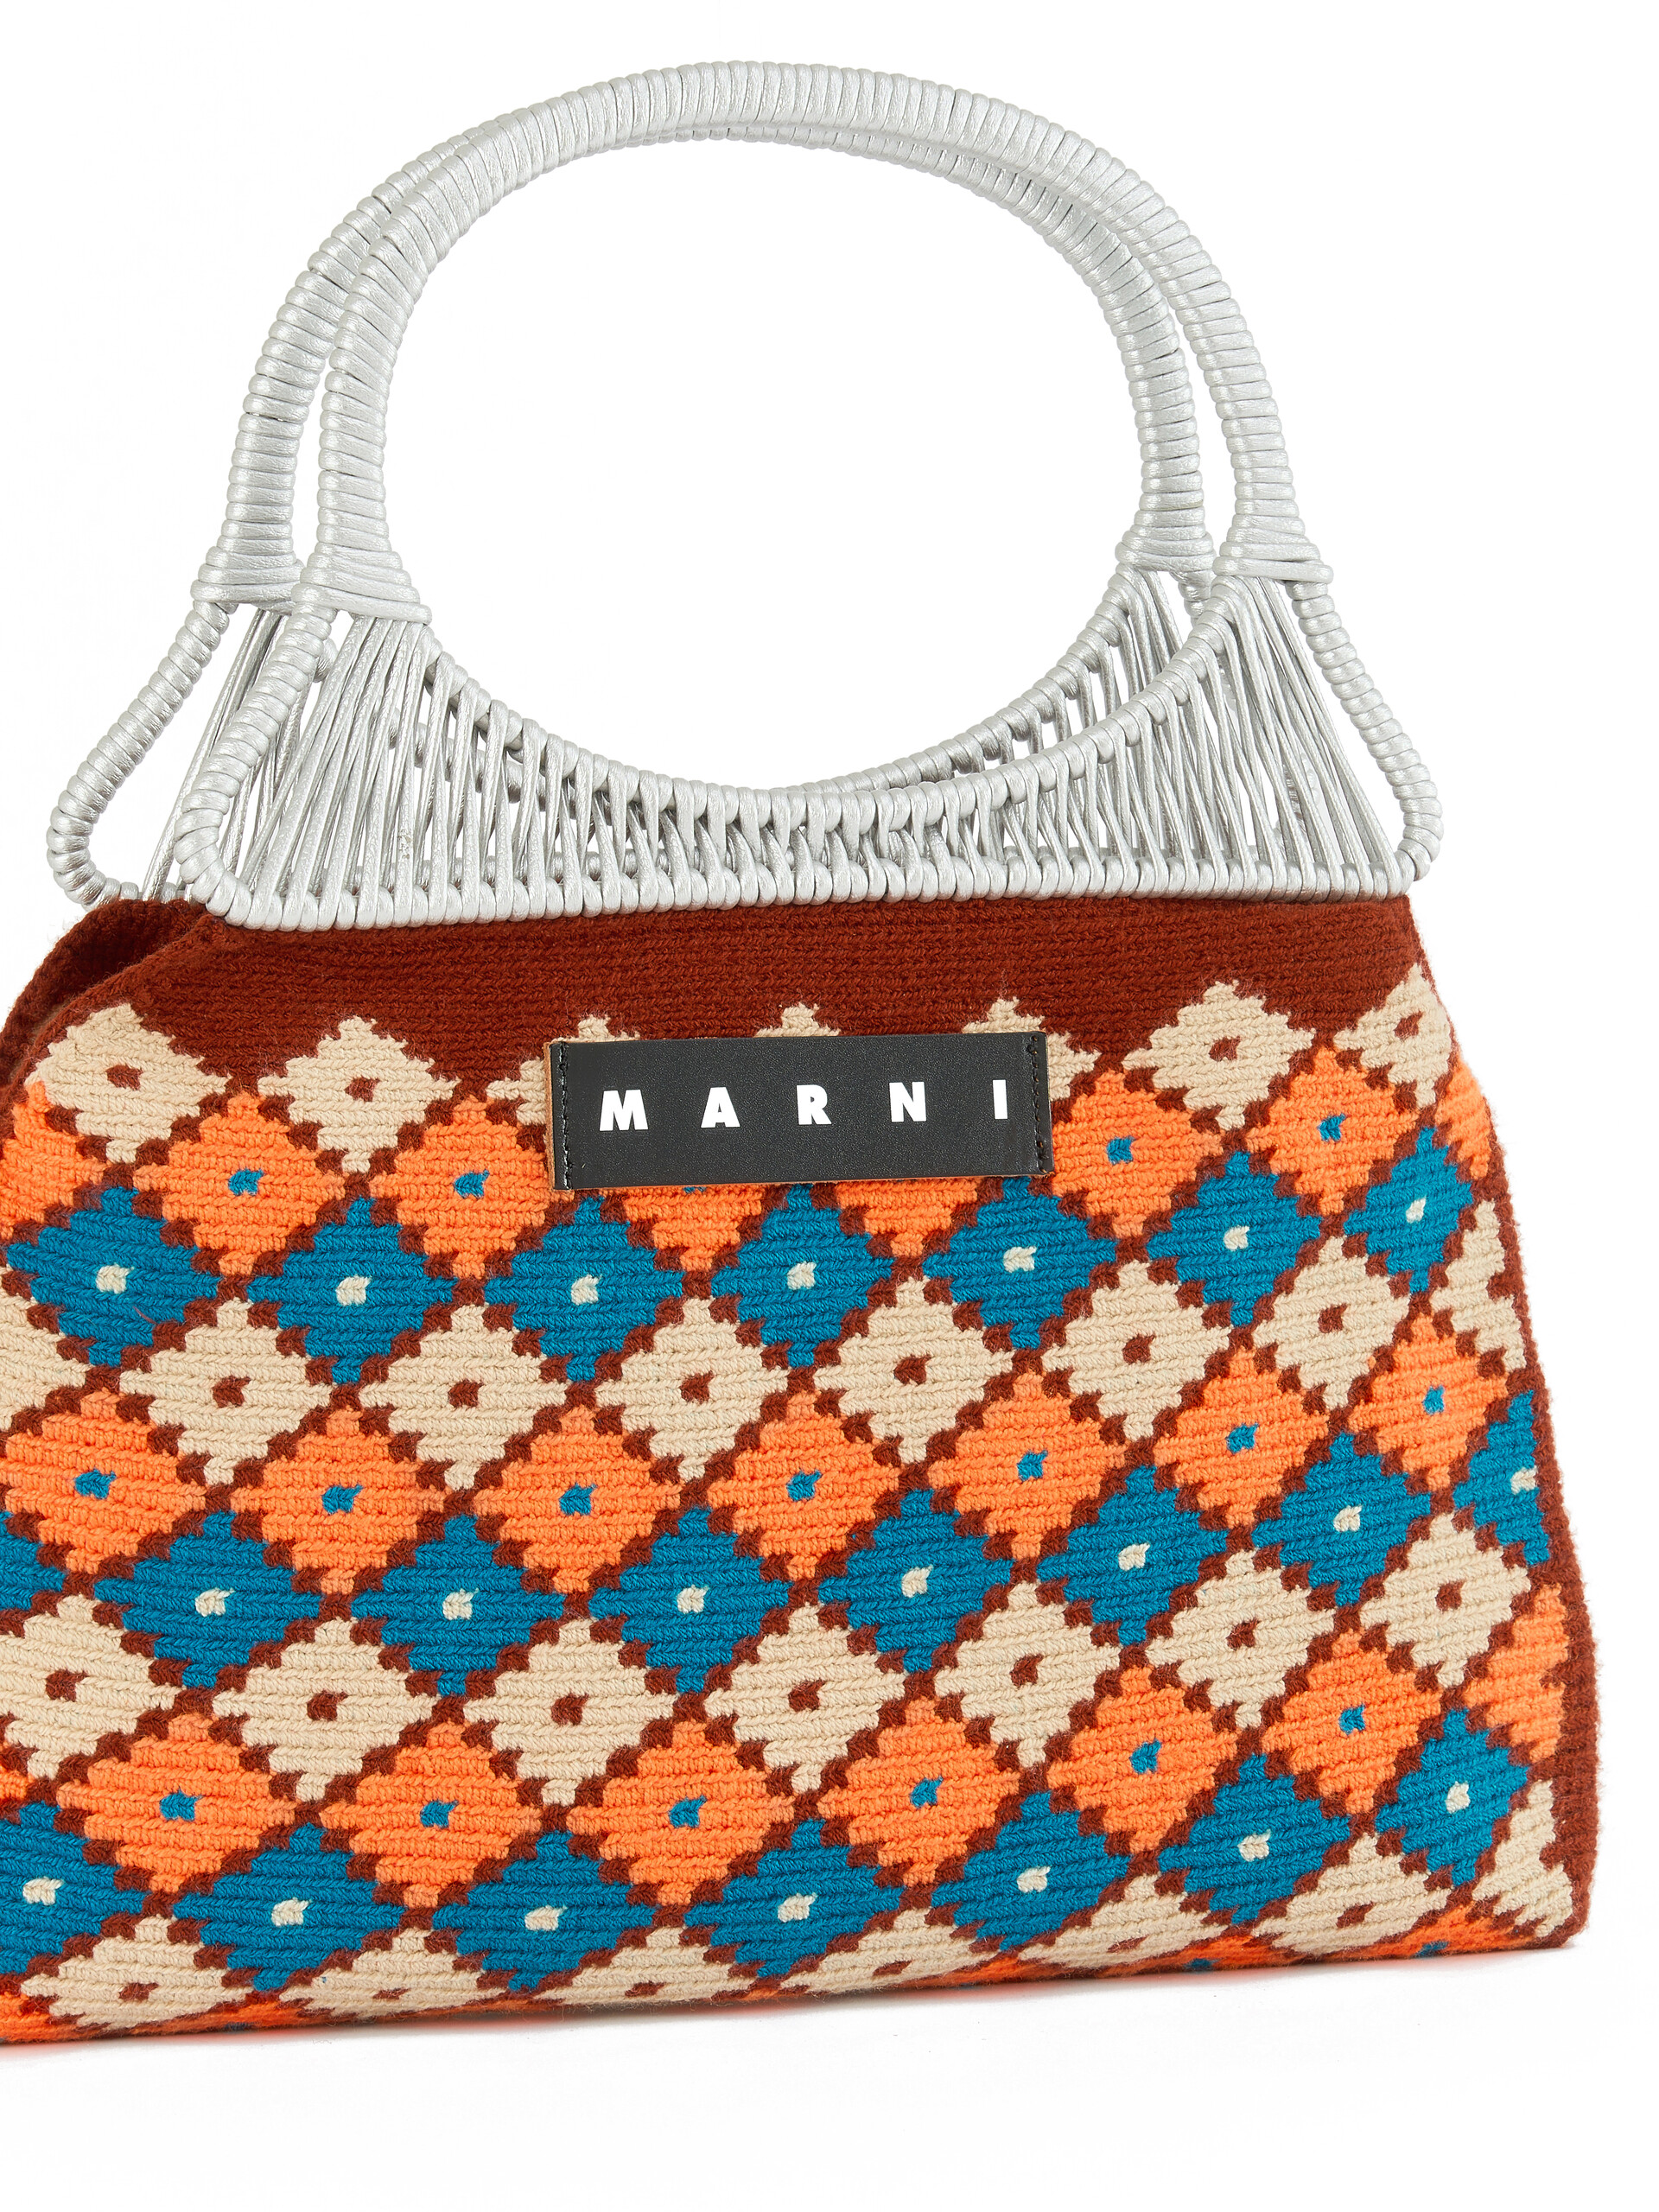 Orange geometric cotton knit MARNI MARKET handbag - Shopping Bags - Image 4